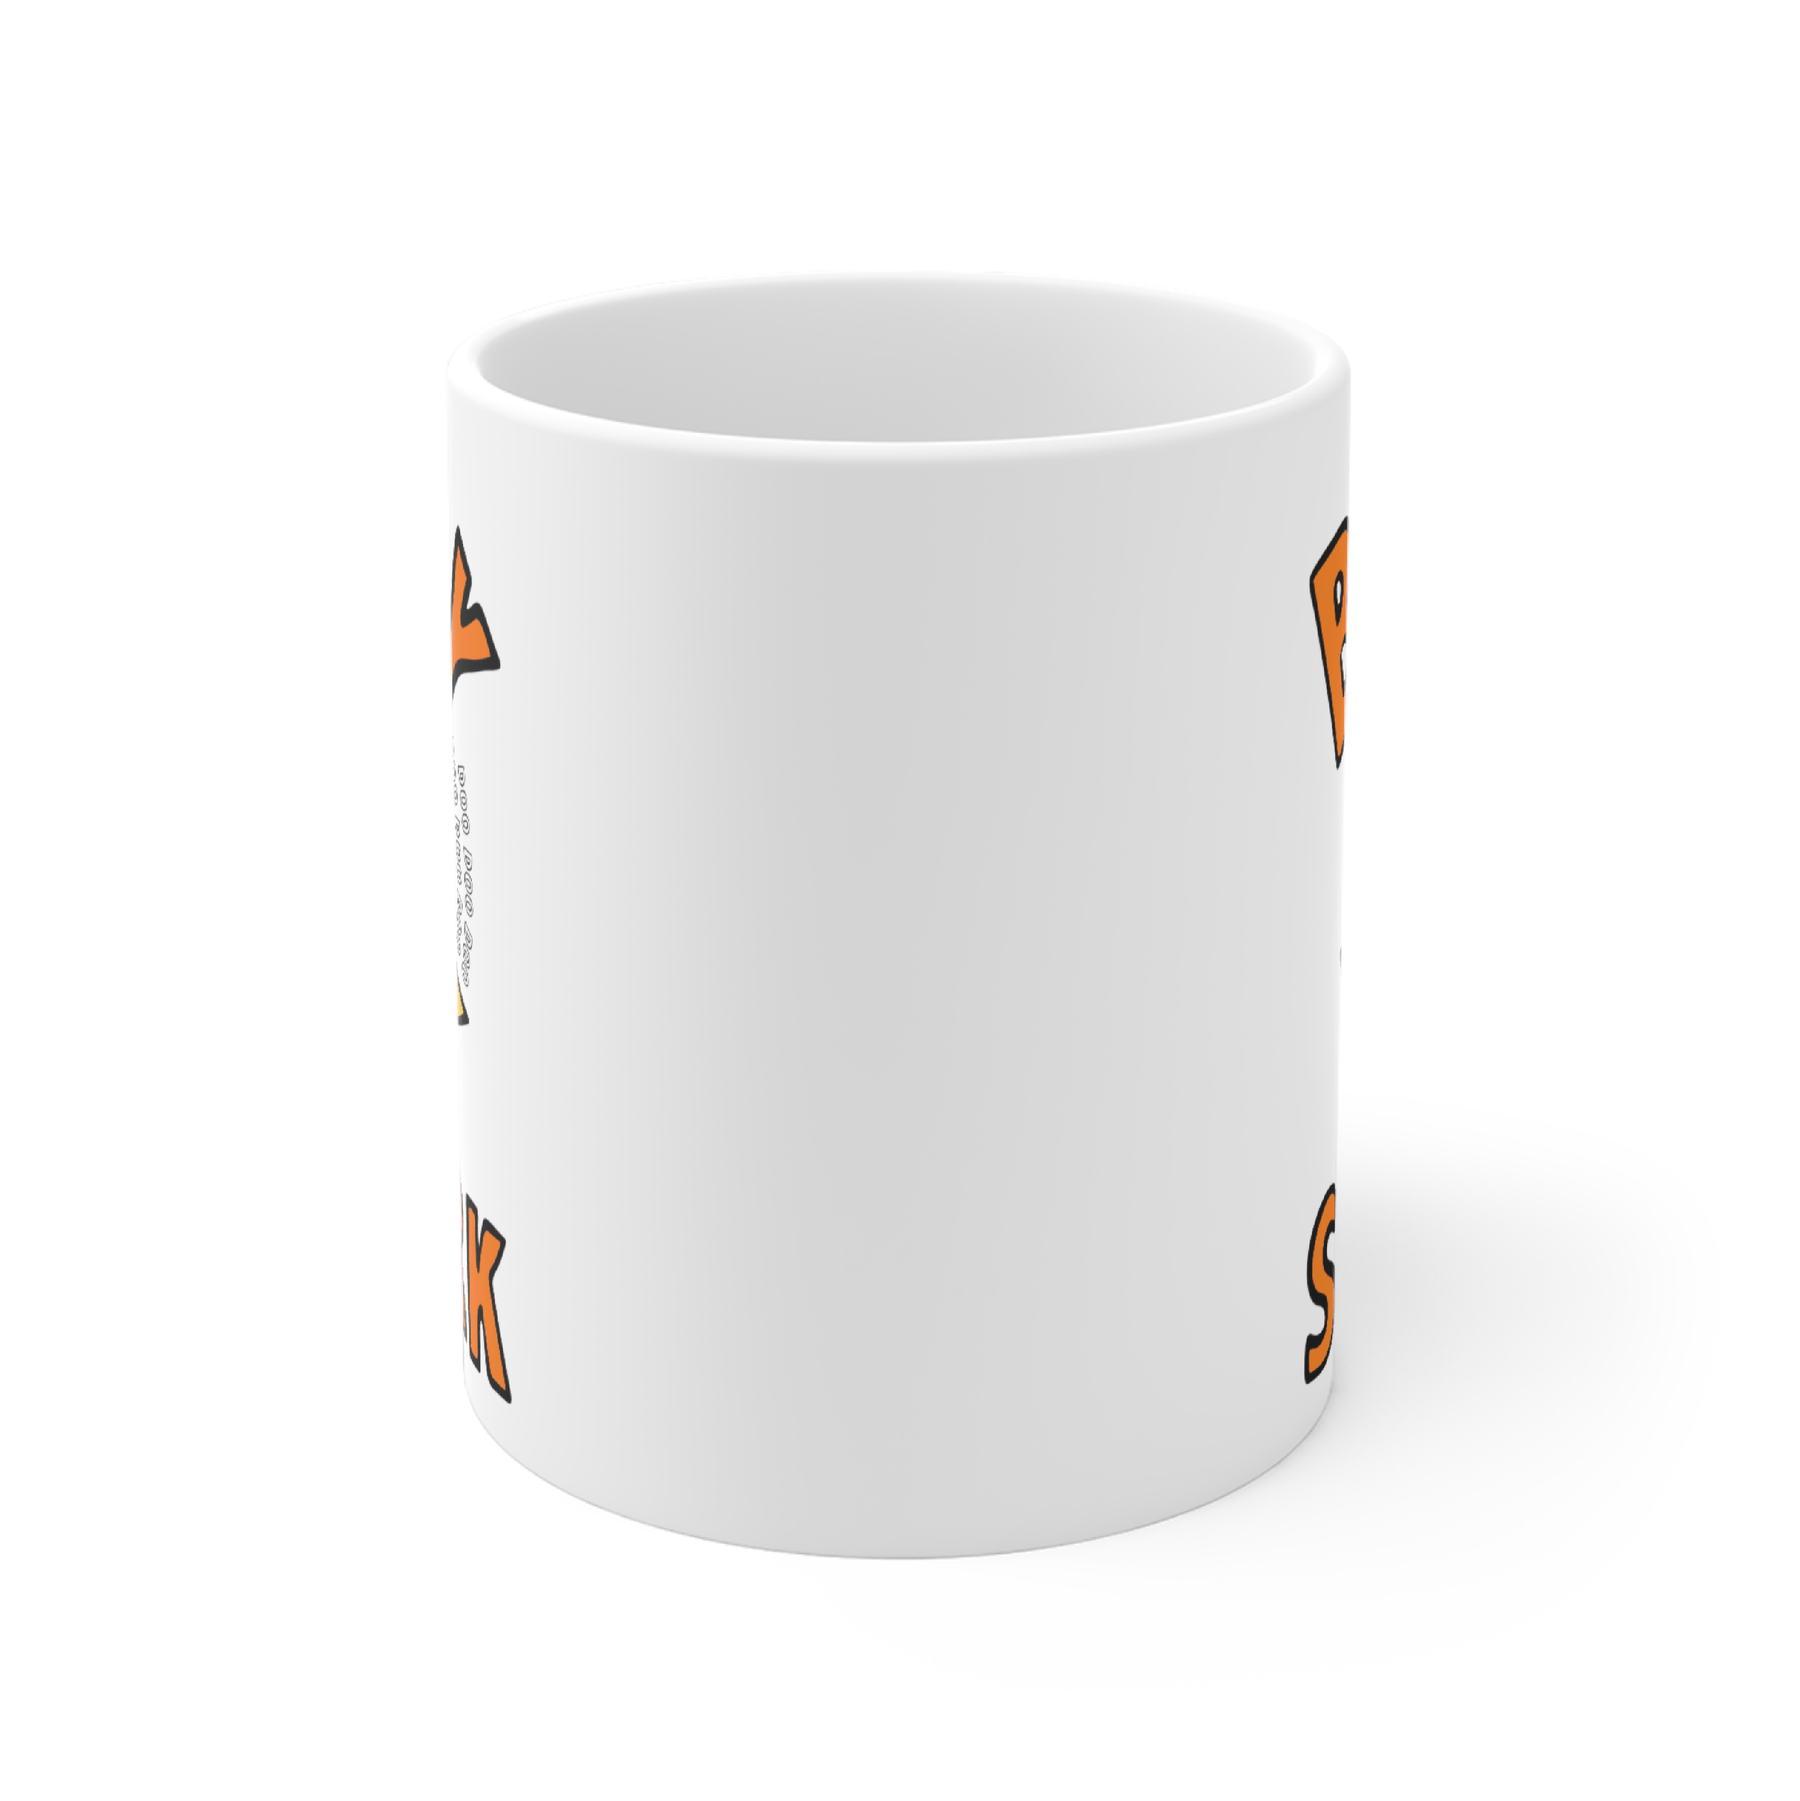 Baby Shark 🦈 - Coffee Mug